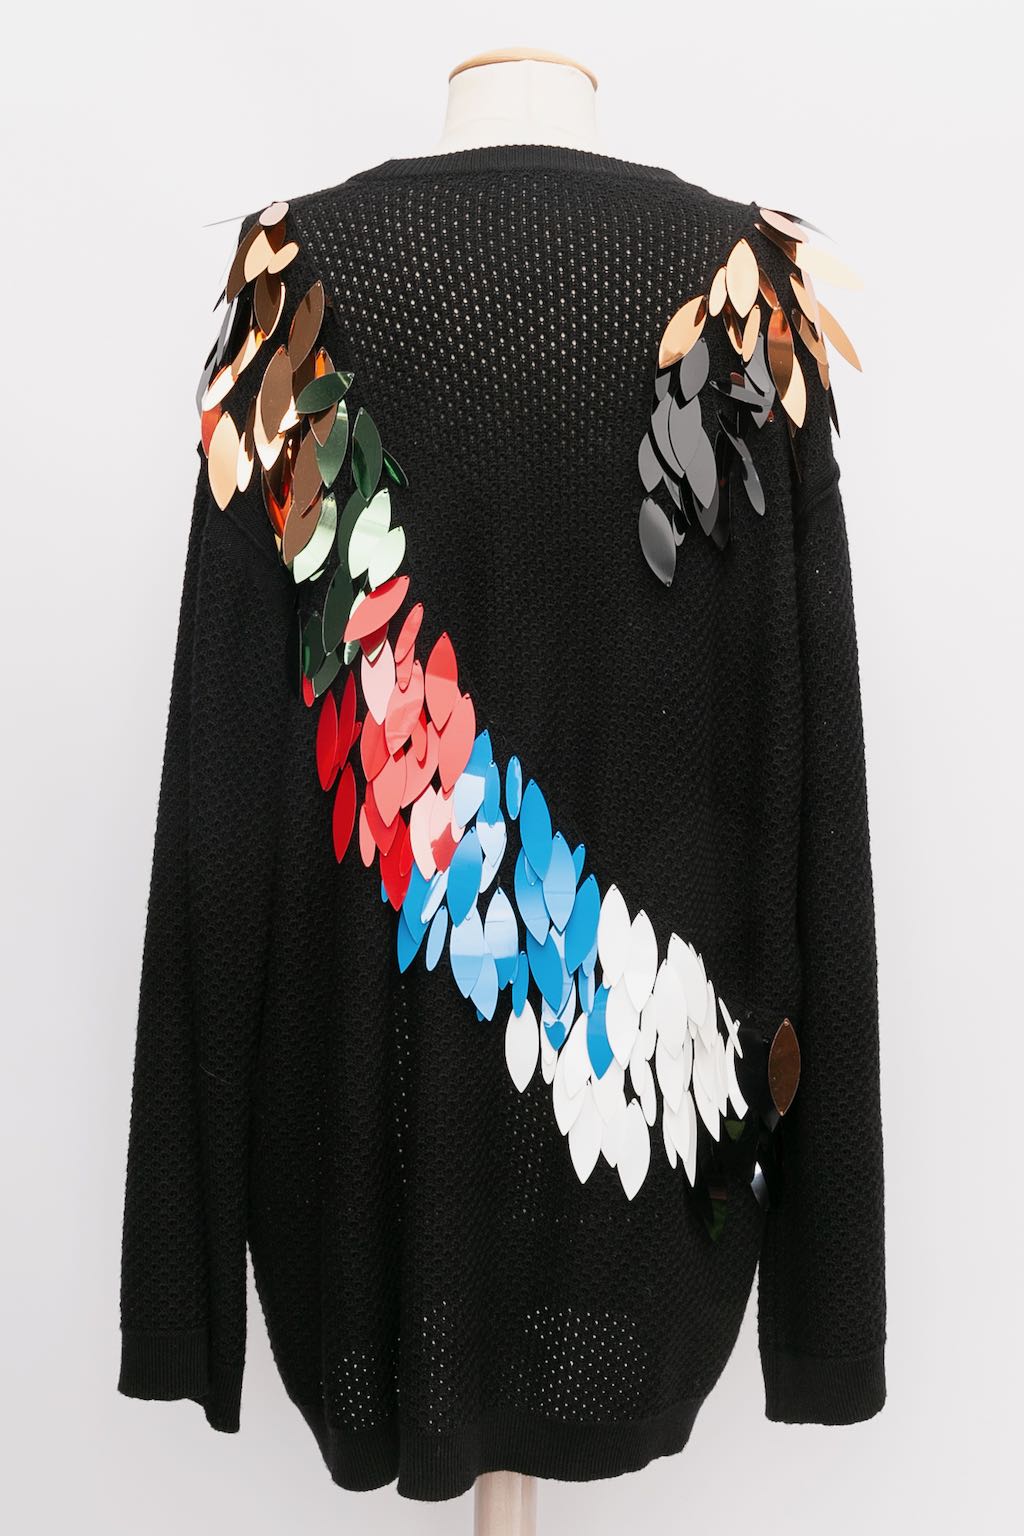 Sonia Rykiel sweater